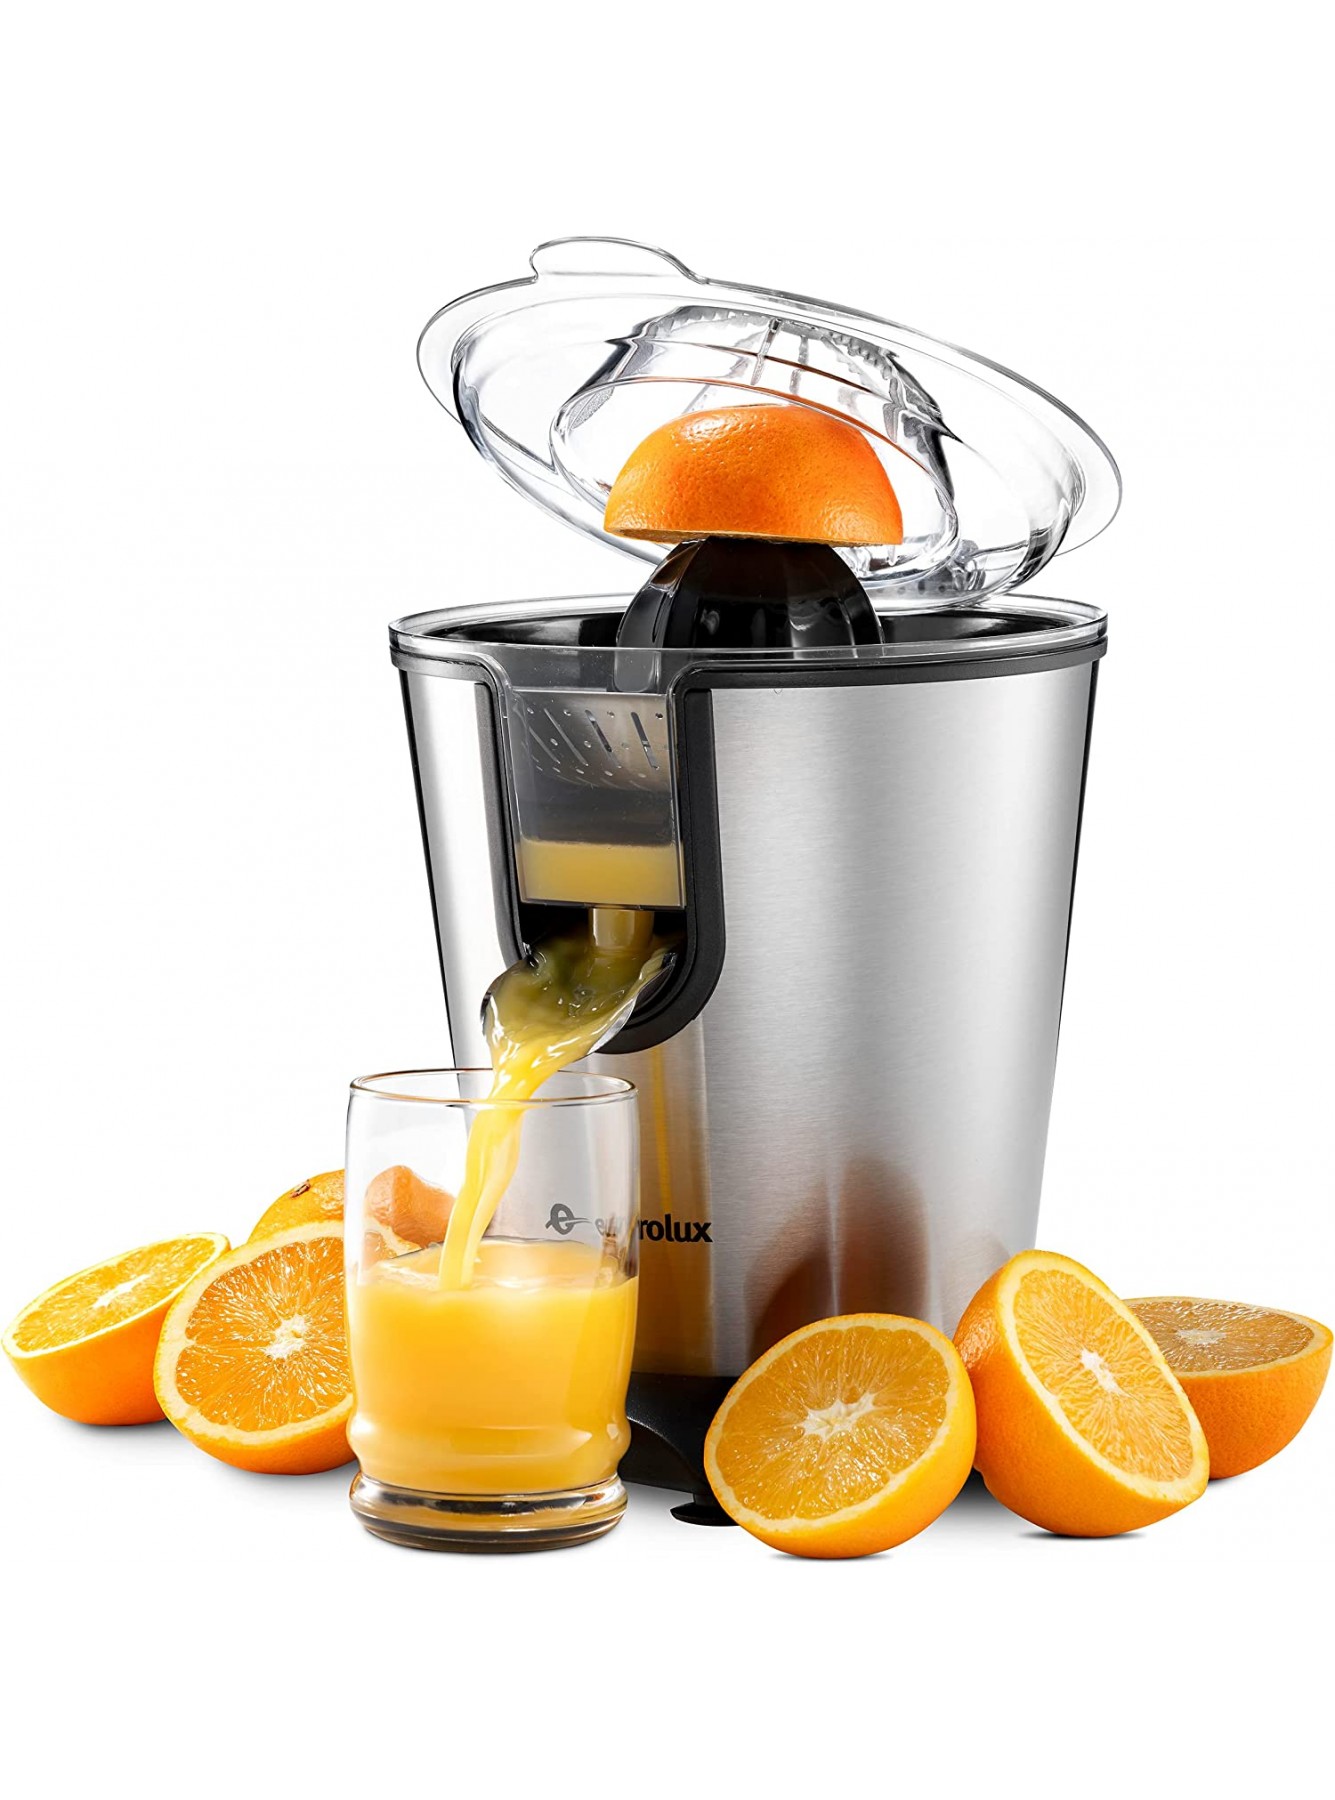 Eurolux Electric Citrus Juicer Squeezer for Orange Lemon Grapefruit With 160 Watts of Power Brushed Stainless Steel B08DJ8RSCK